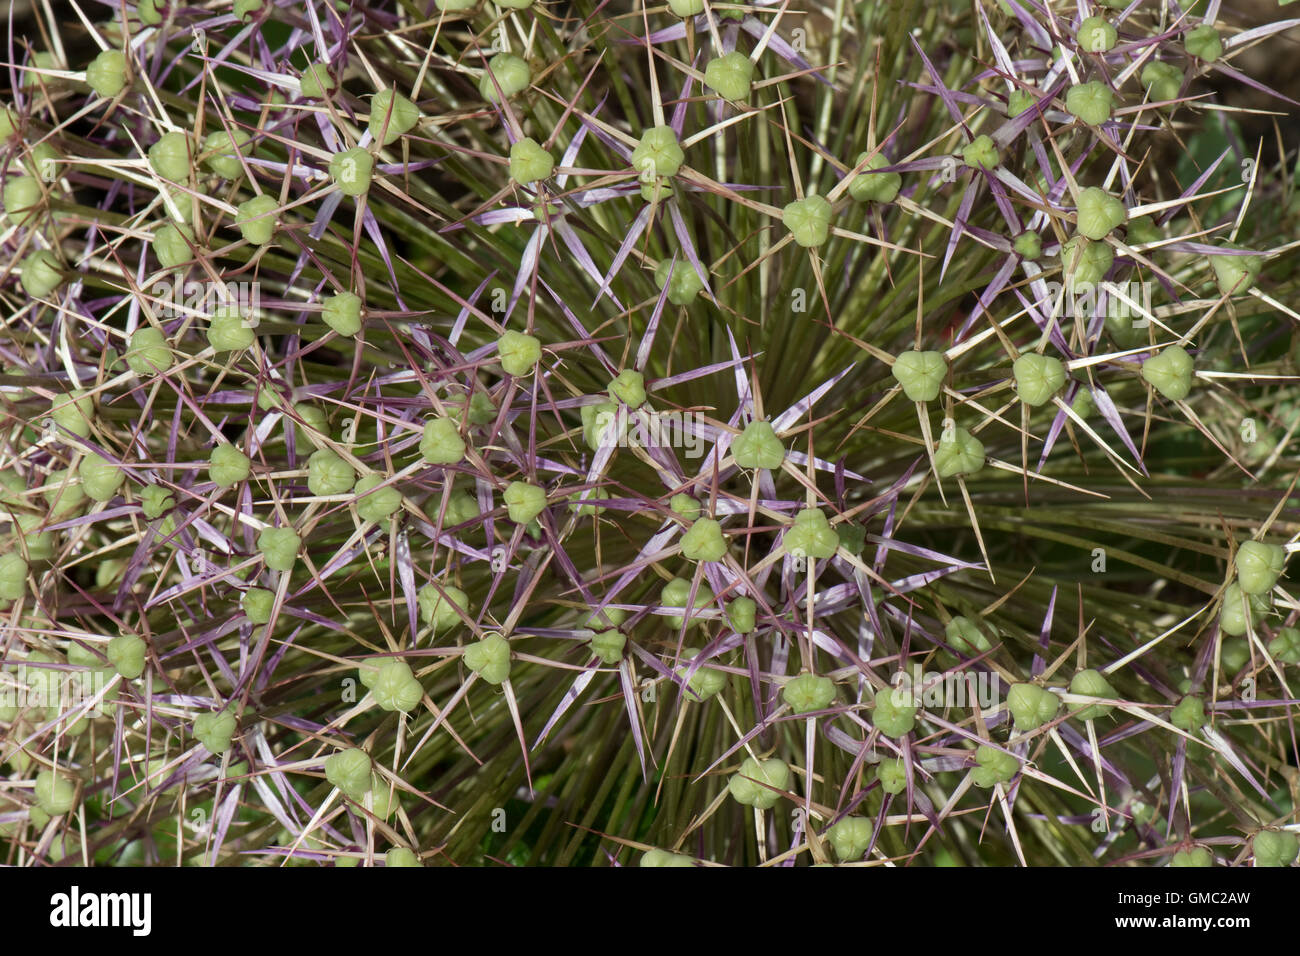 Testa di fiori di broccoli su una stella di Persia, Allium christophii, withdeveloping semi e ovaie verde Foto Stock